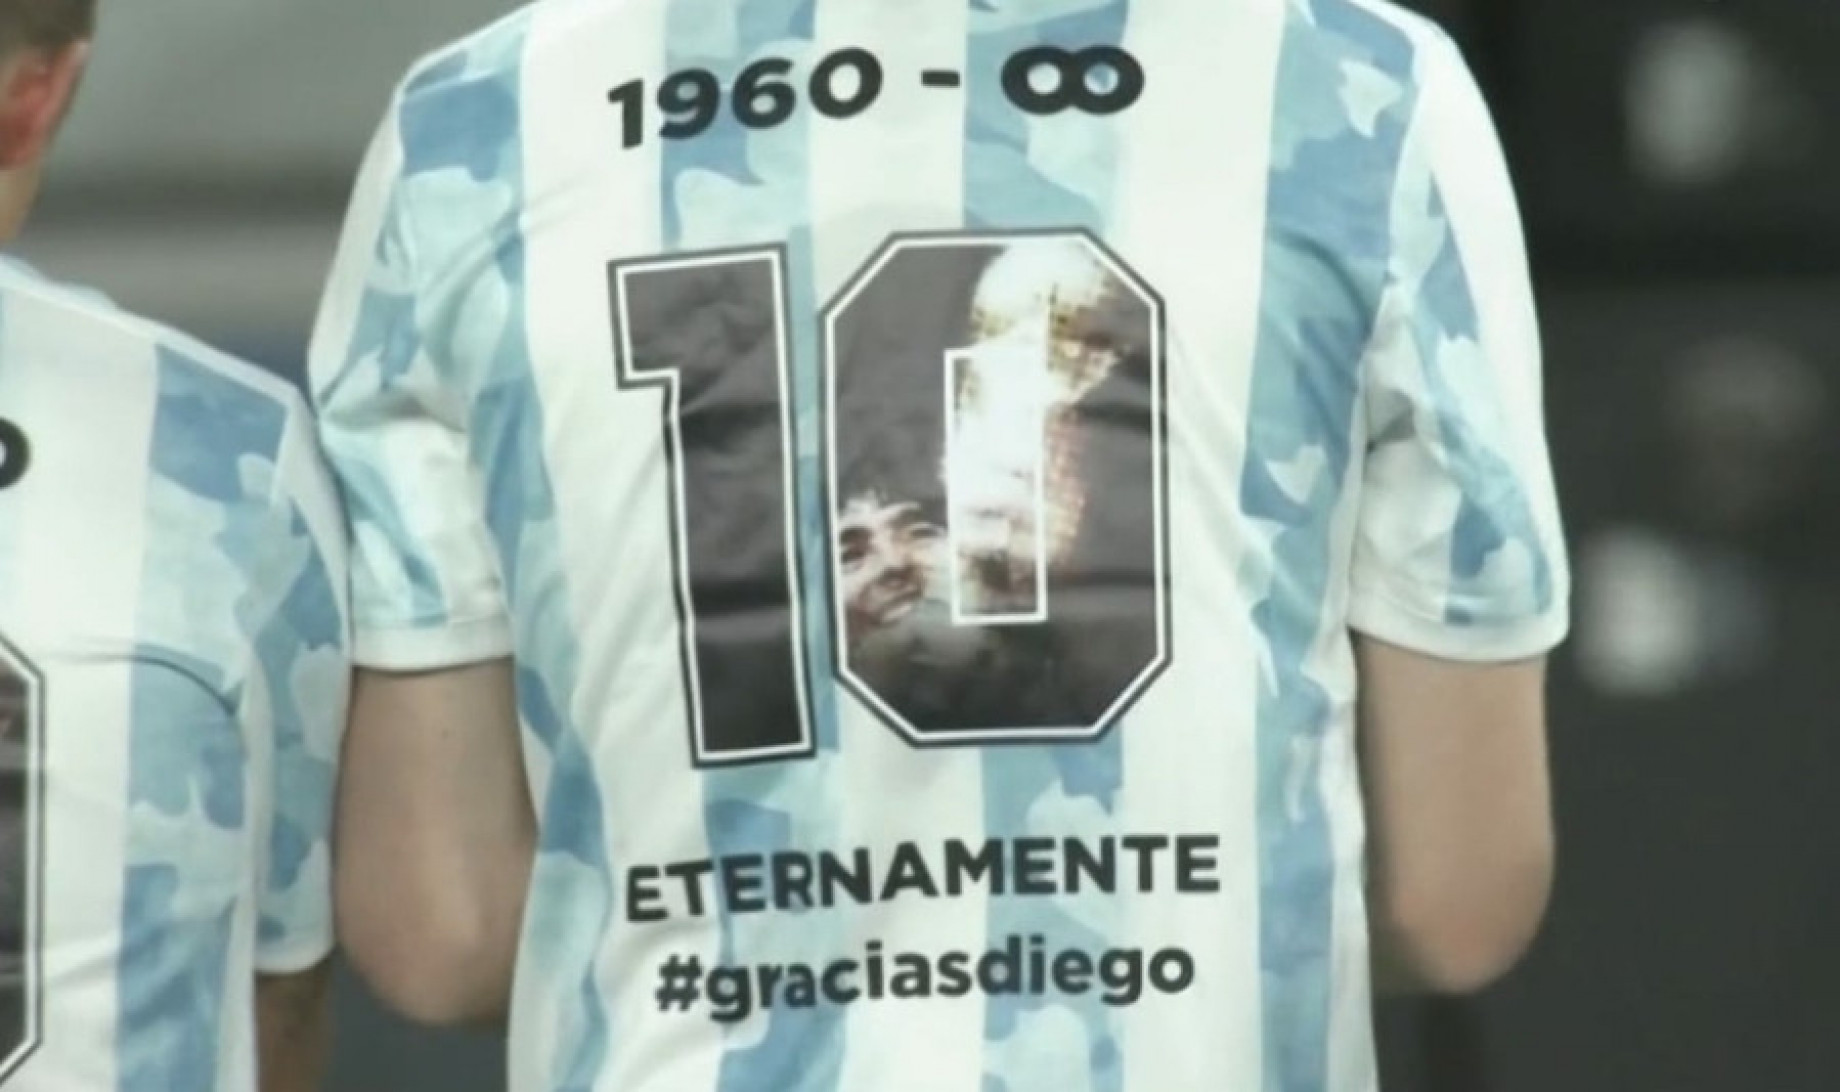 maglia_maradona_argentina_gaich_screen.jpeg